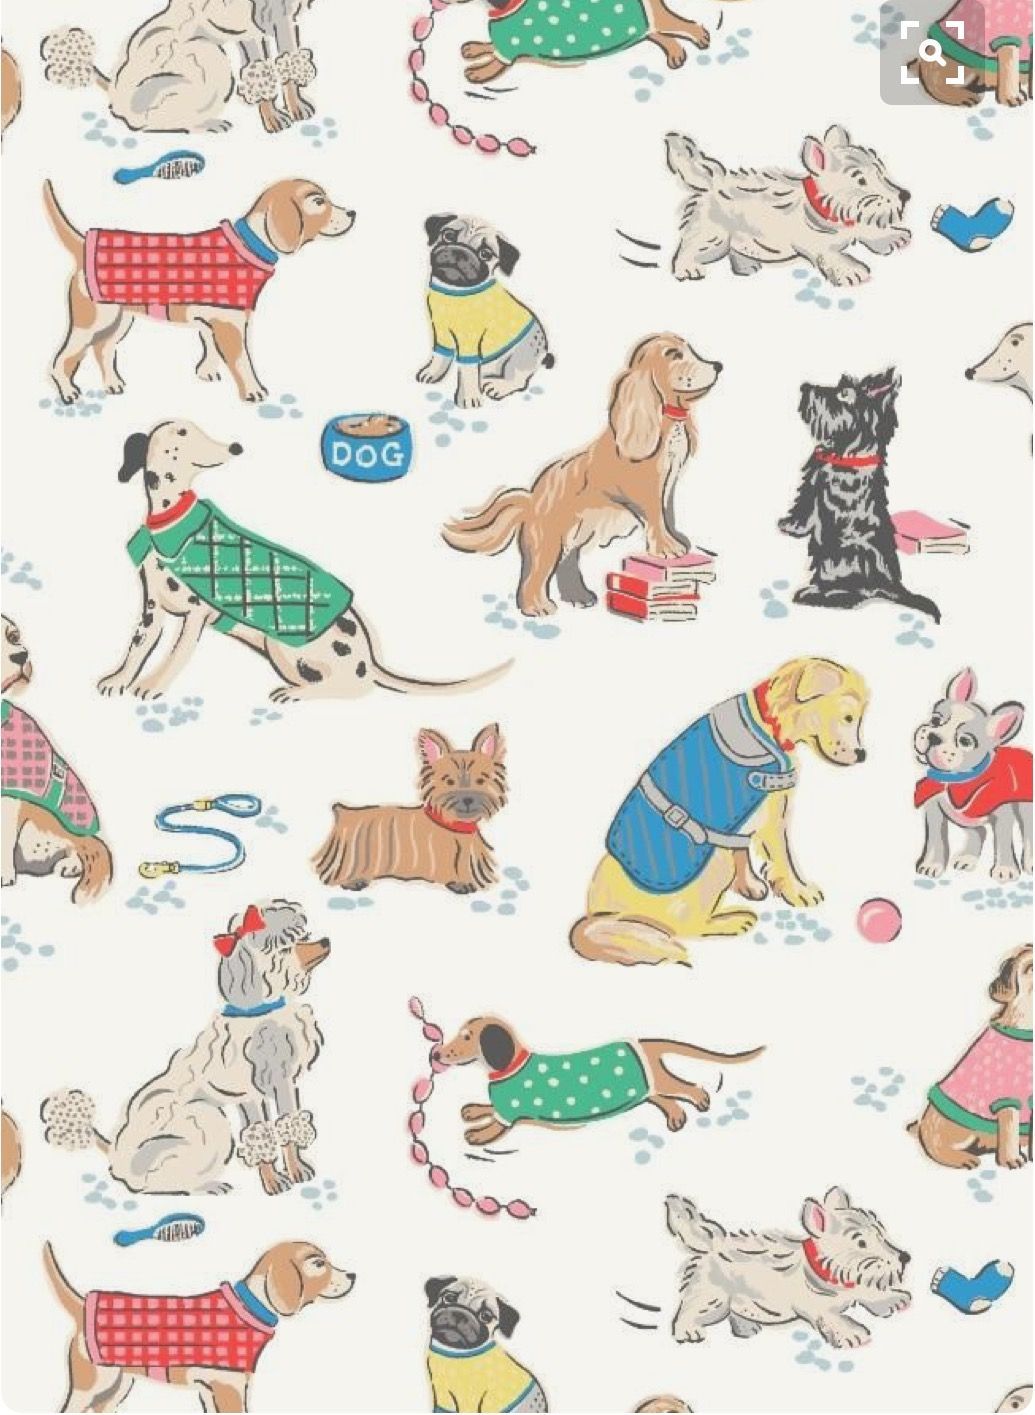 Dog Artwork Wallpapers